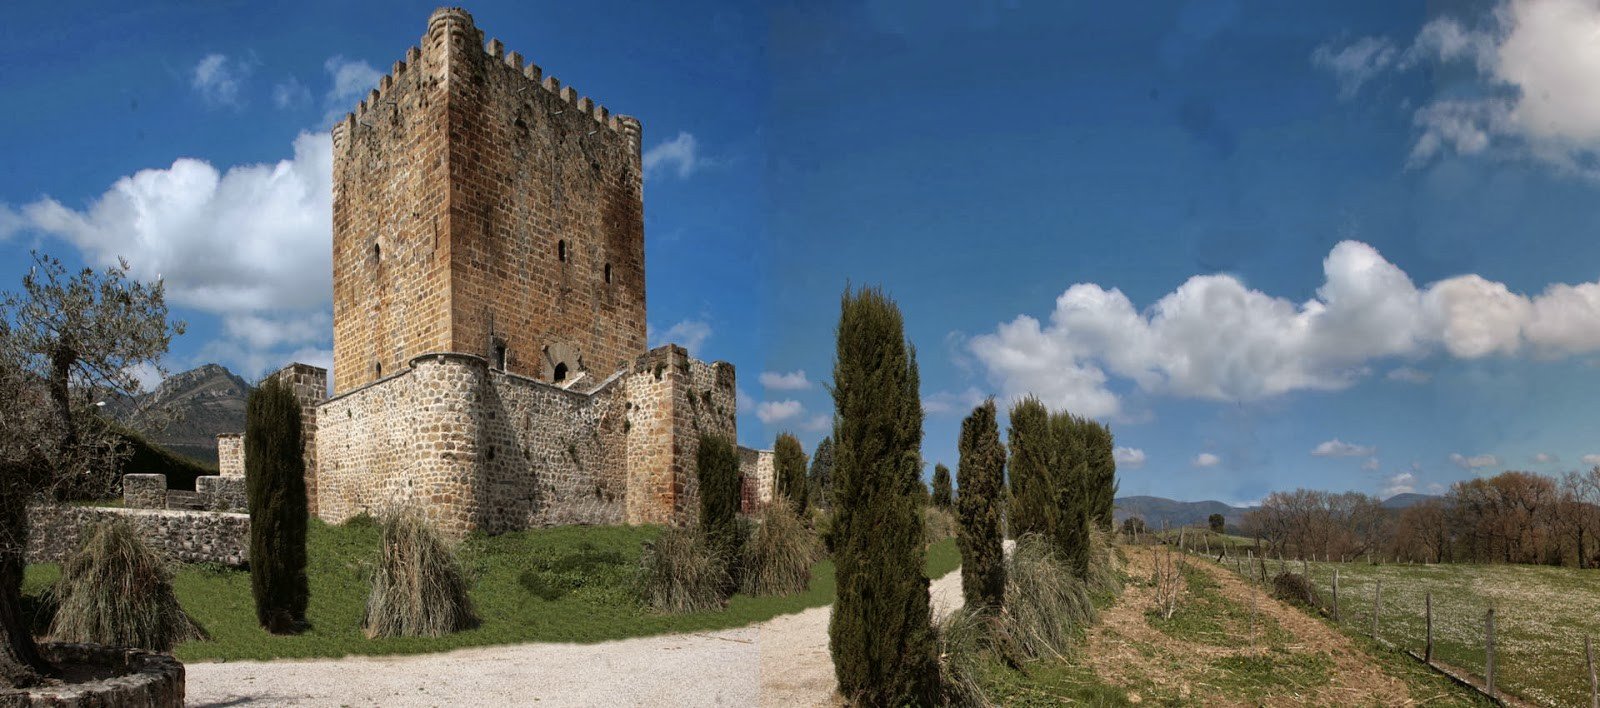 Traditions plus technology. Unique medieval castle is for sale